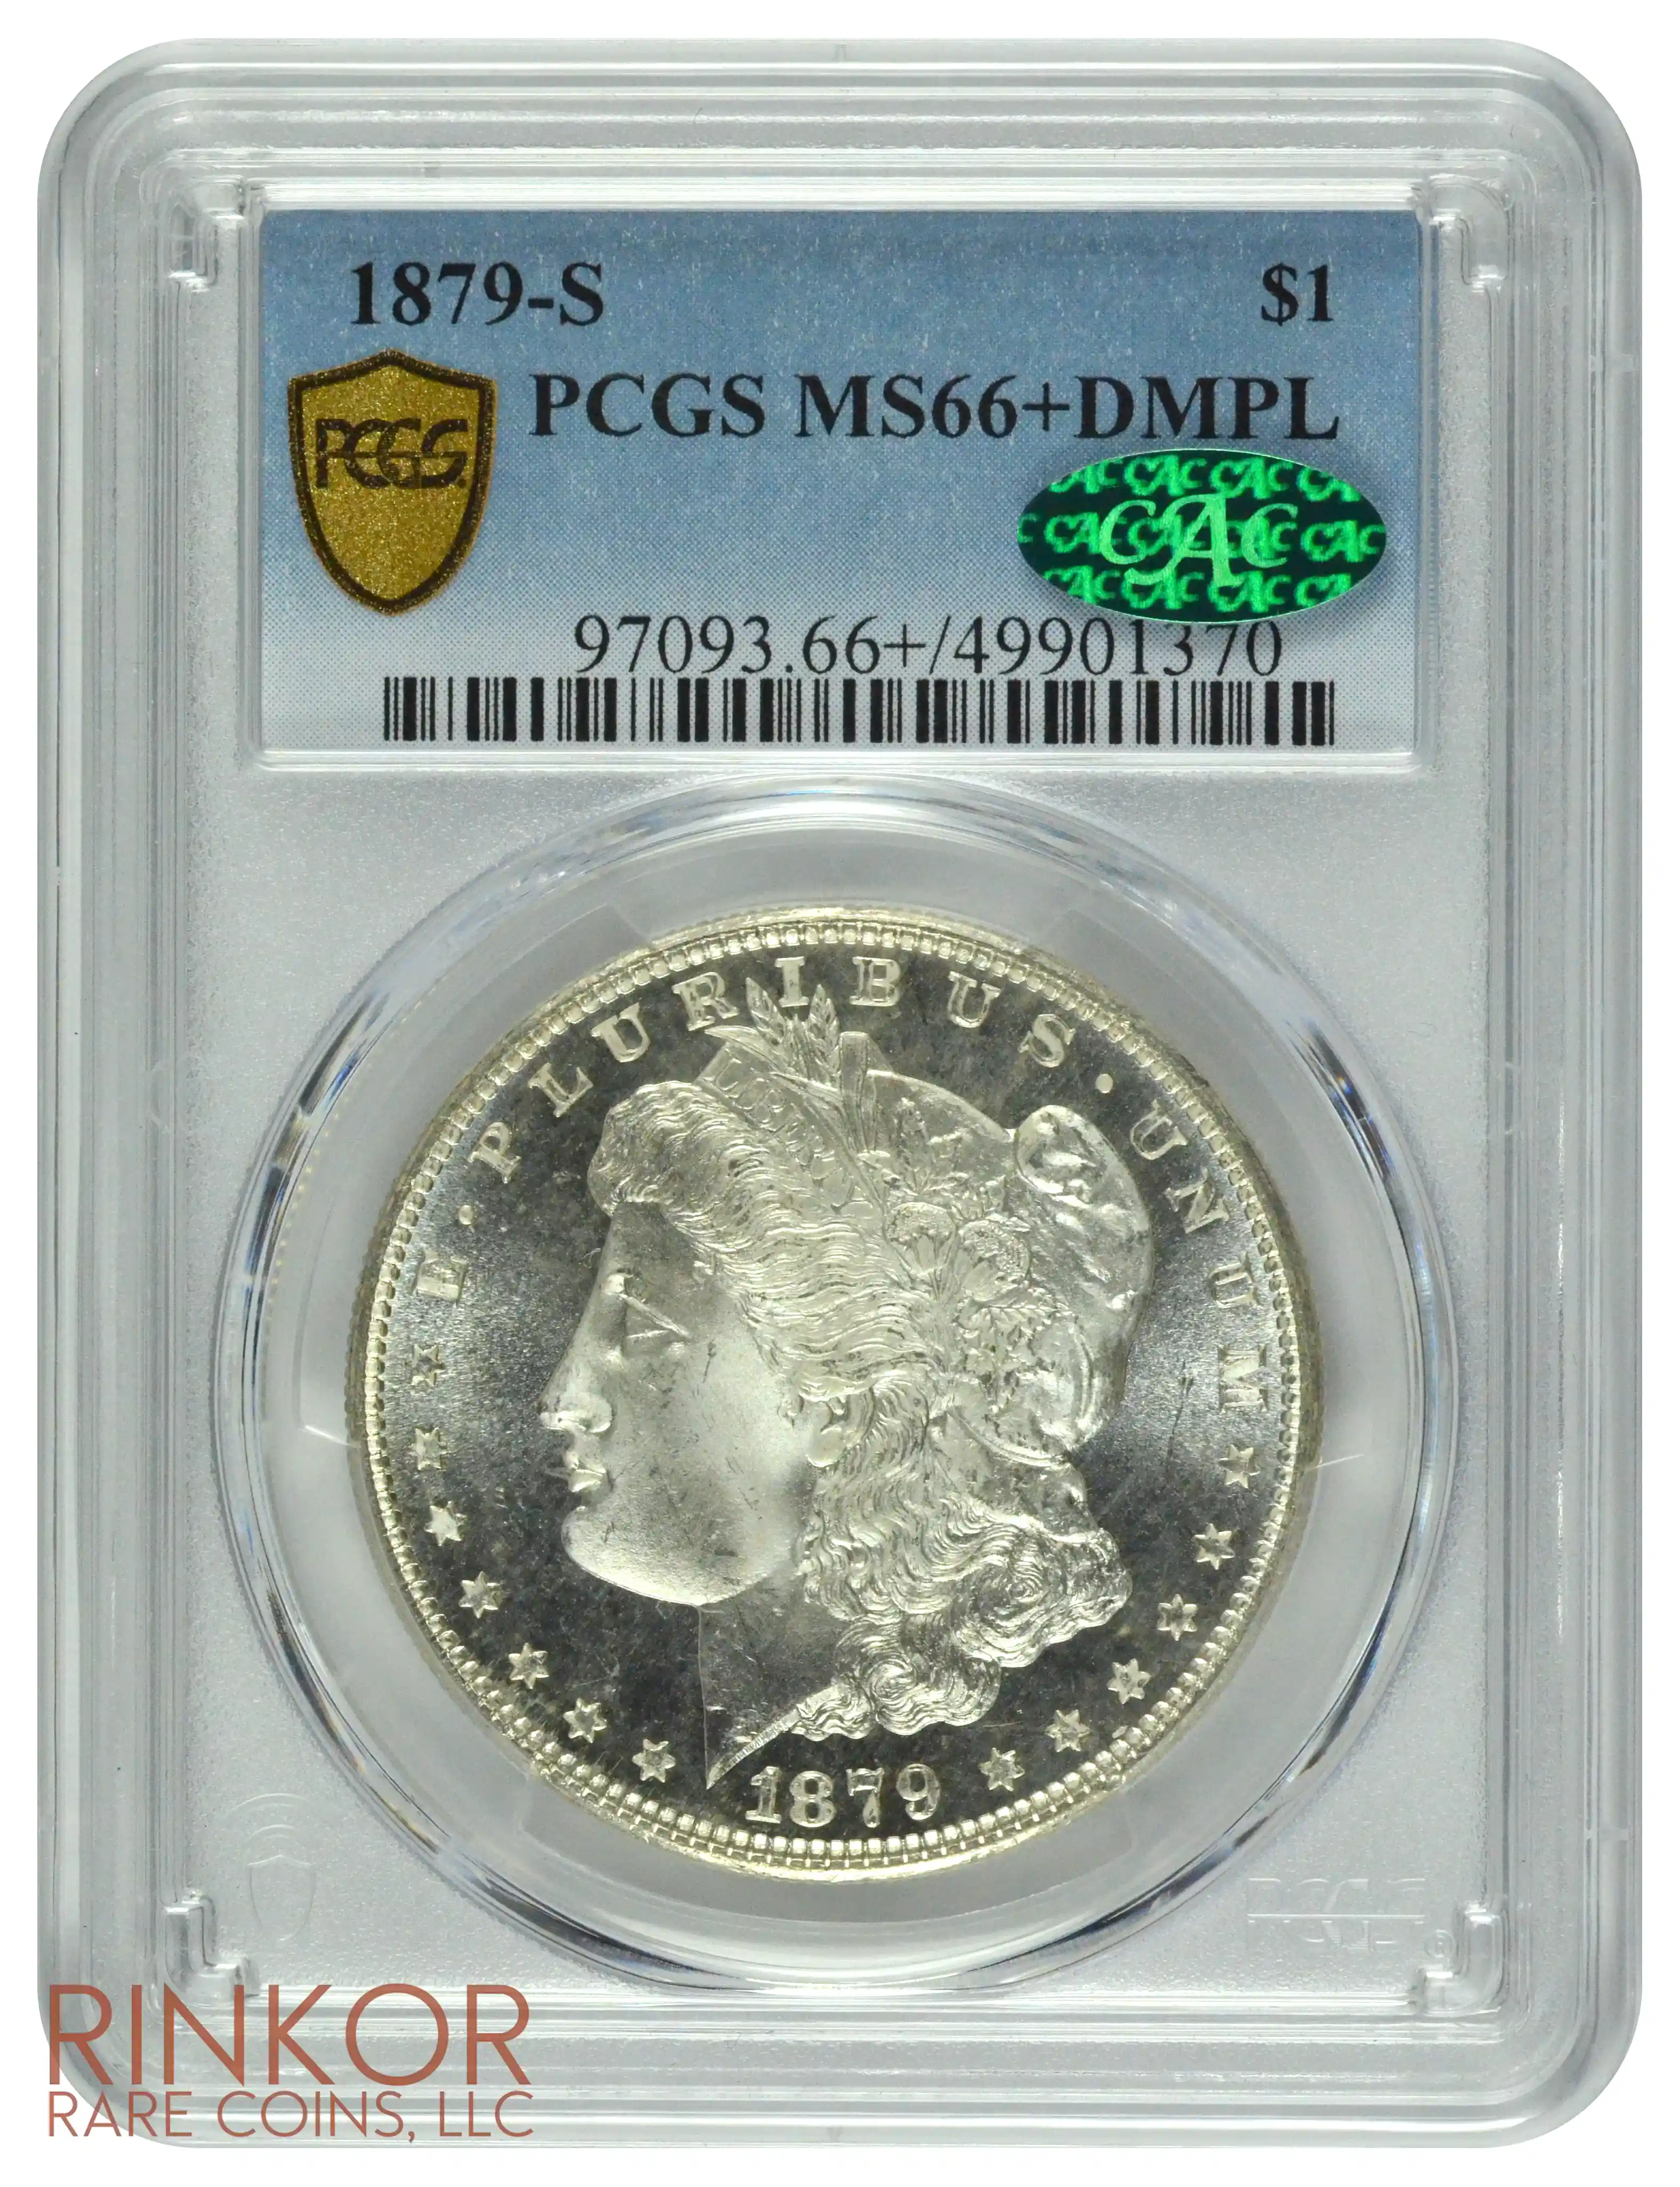 1879-S $1 PCGS MS 66+ DMPL CAC